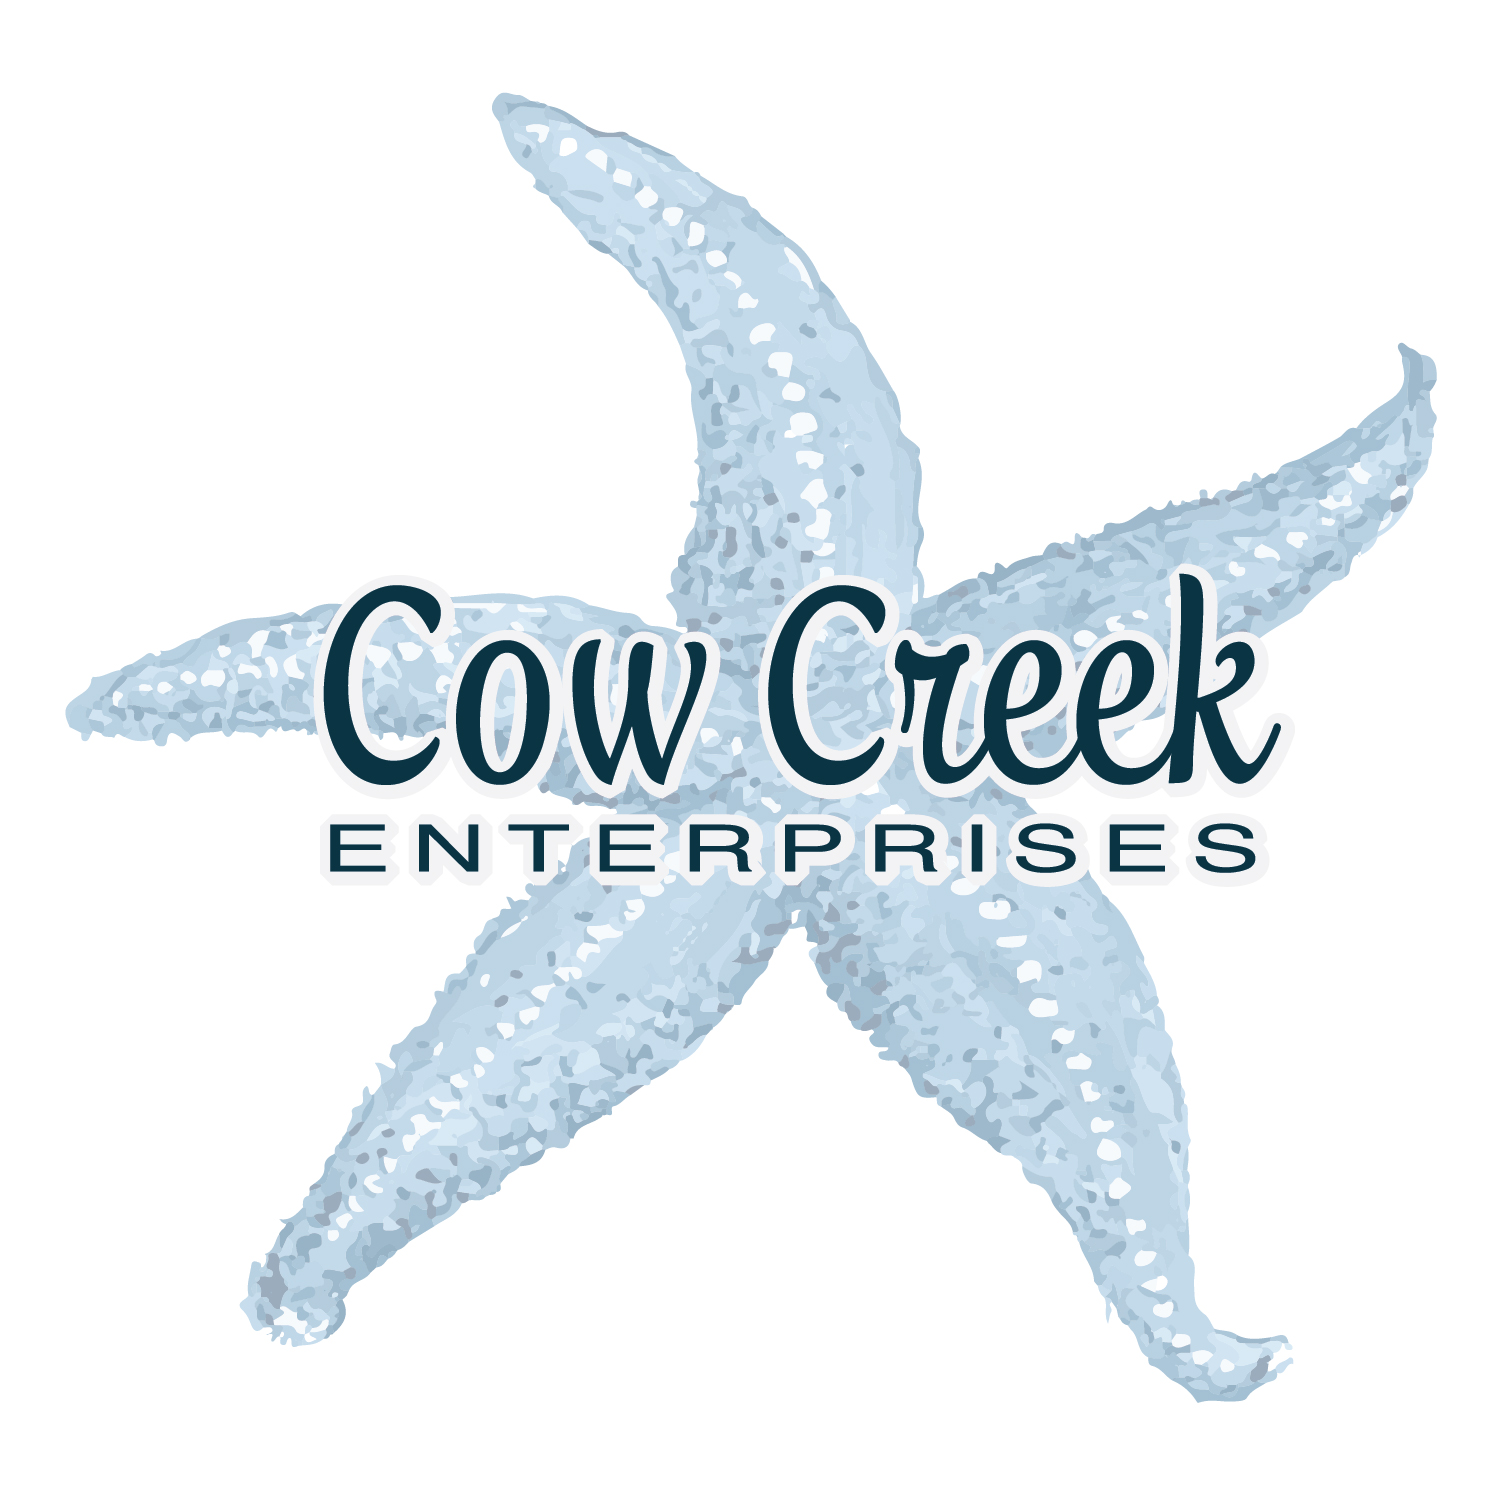 Cow Creek Enterprises